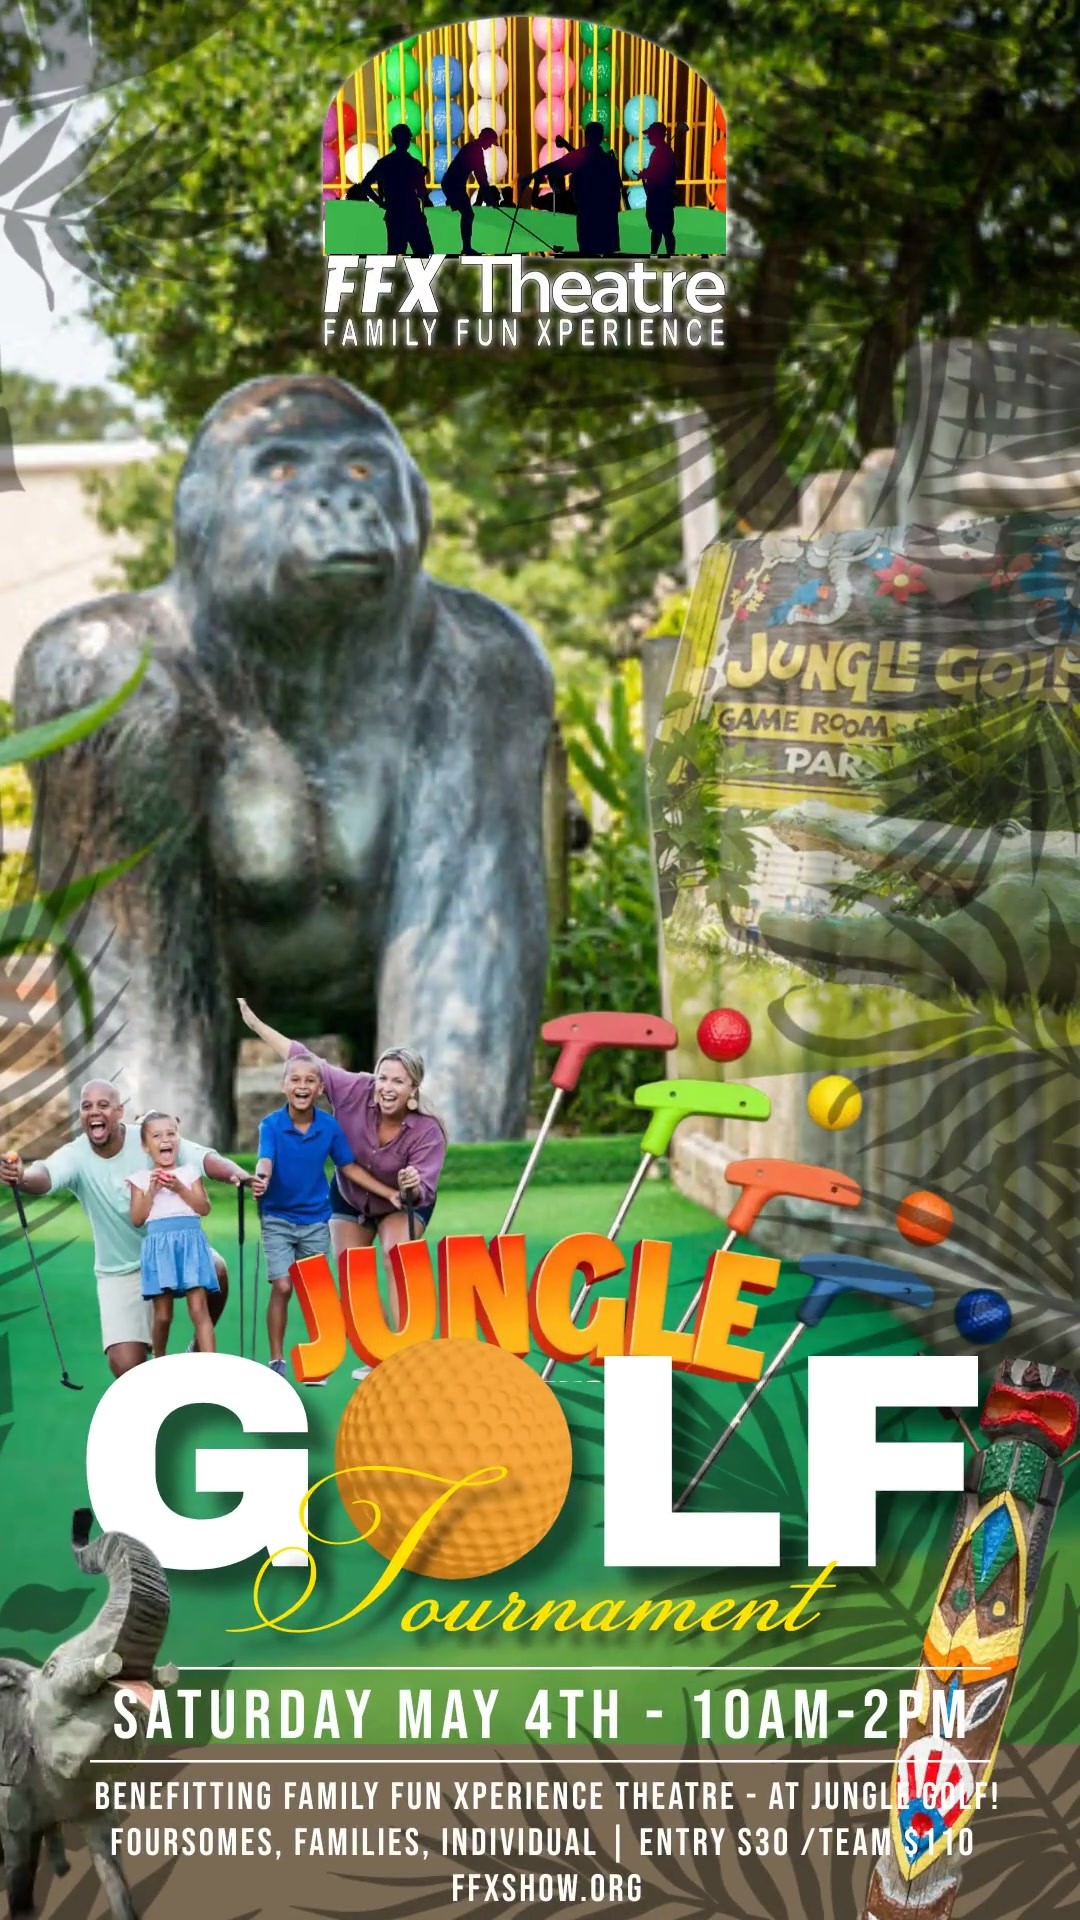 Jungle Golf Tournament! FFX Fun-raiser for all ages! NEW DATE on may. 06, 00:00@Jungle Golf - Compra entradas y obtén información enFamily Fun Xperience tickets.ffxshow.org